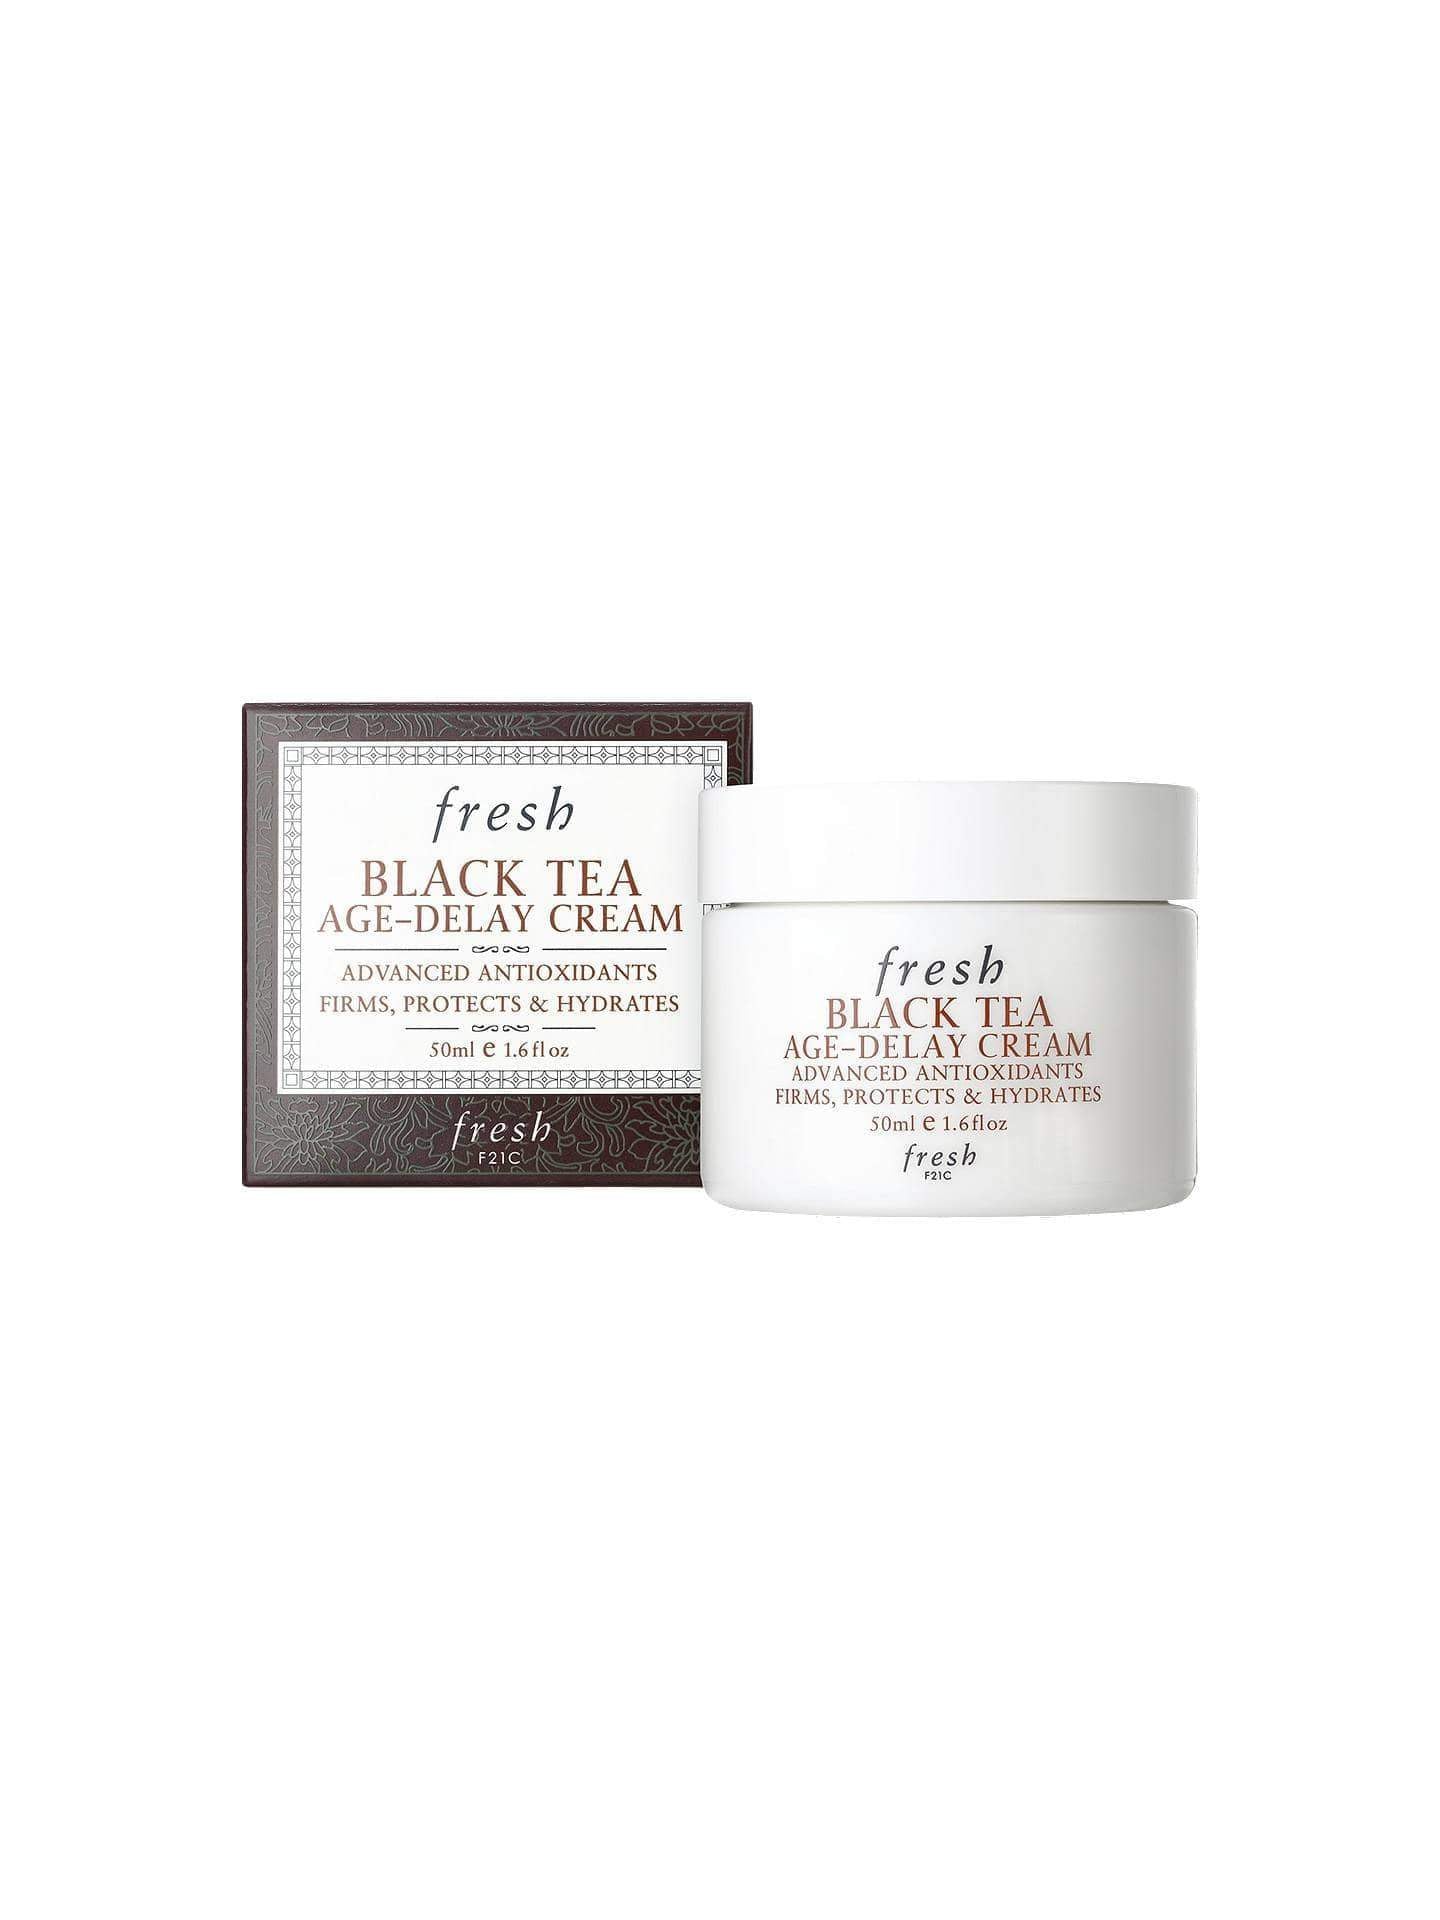 Fresh Black Tea Age-Delay Cream, 50ml, Face Cream, London Loves Beauty